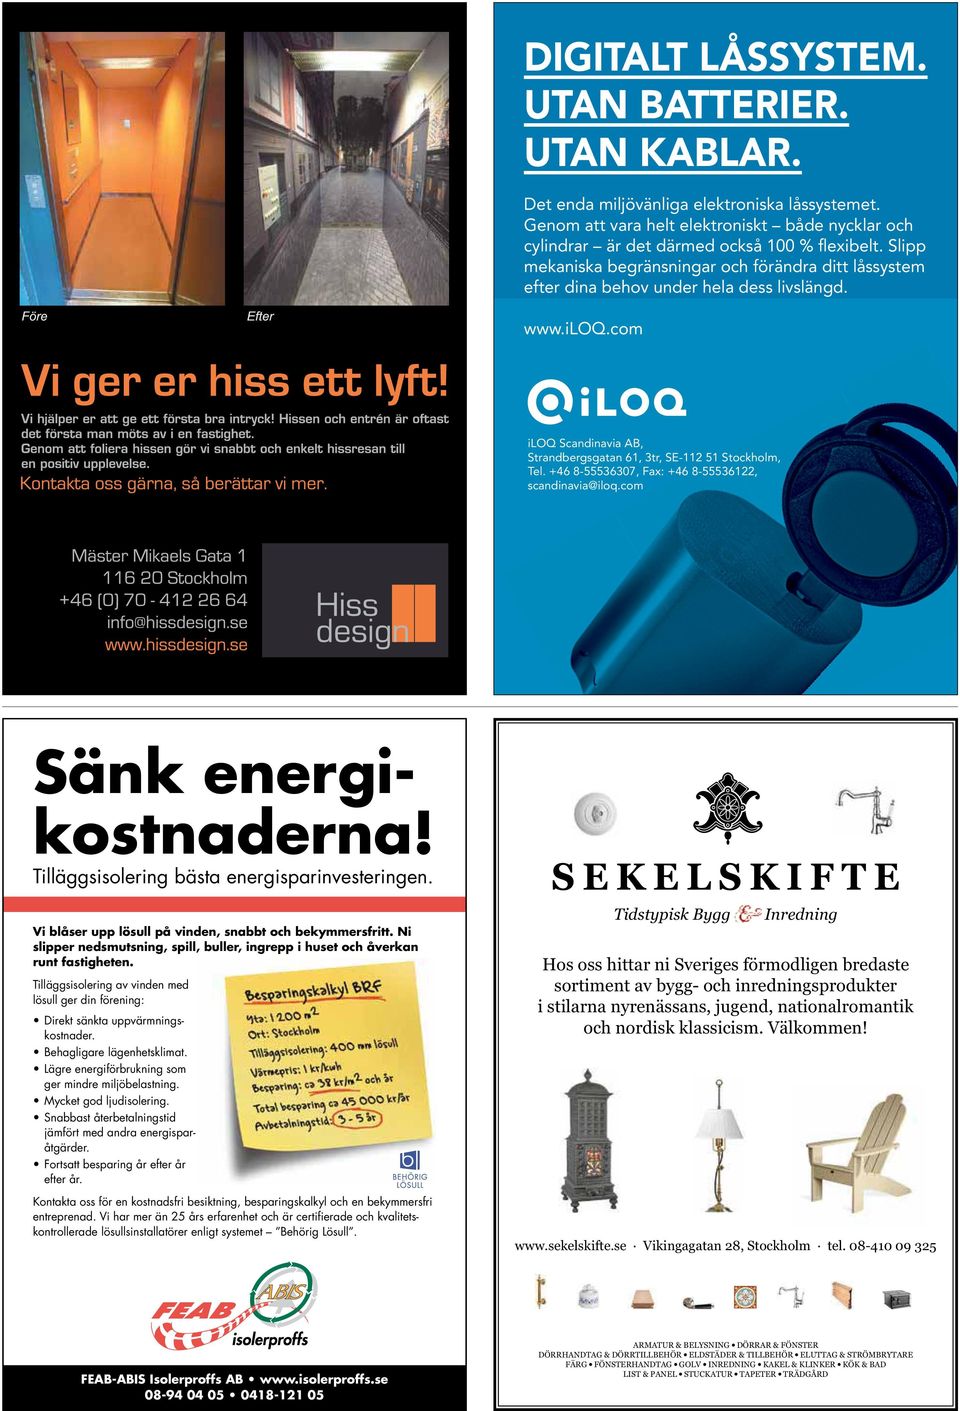 www.iloq.com iloq Scandinavia AB, Strandbergsgatan 61, 3tr, SE-112 51 Stockholm, Tel. +46 8-55536307, Fax: +46 8-55536122, scandinavia@iloq.com Sänk energikostnaderna!